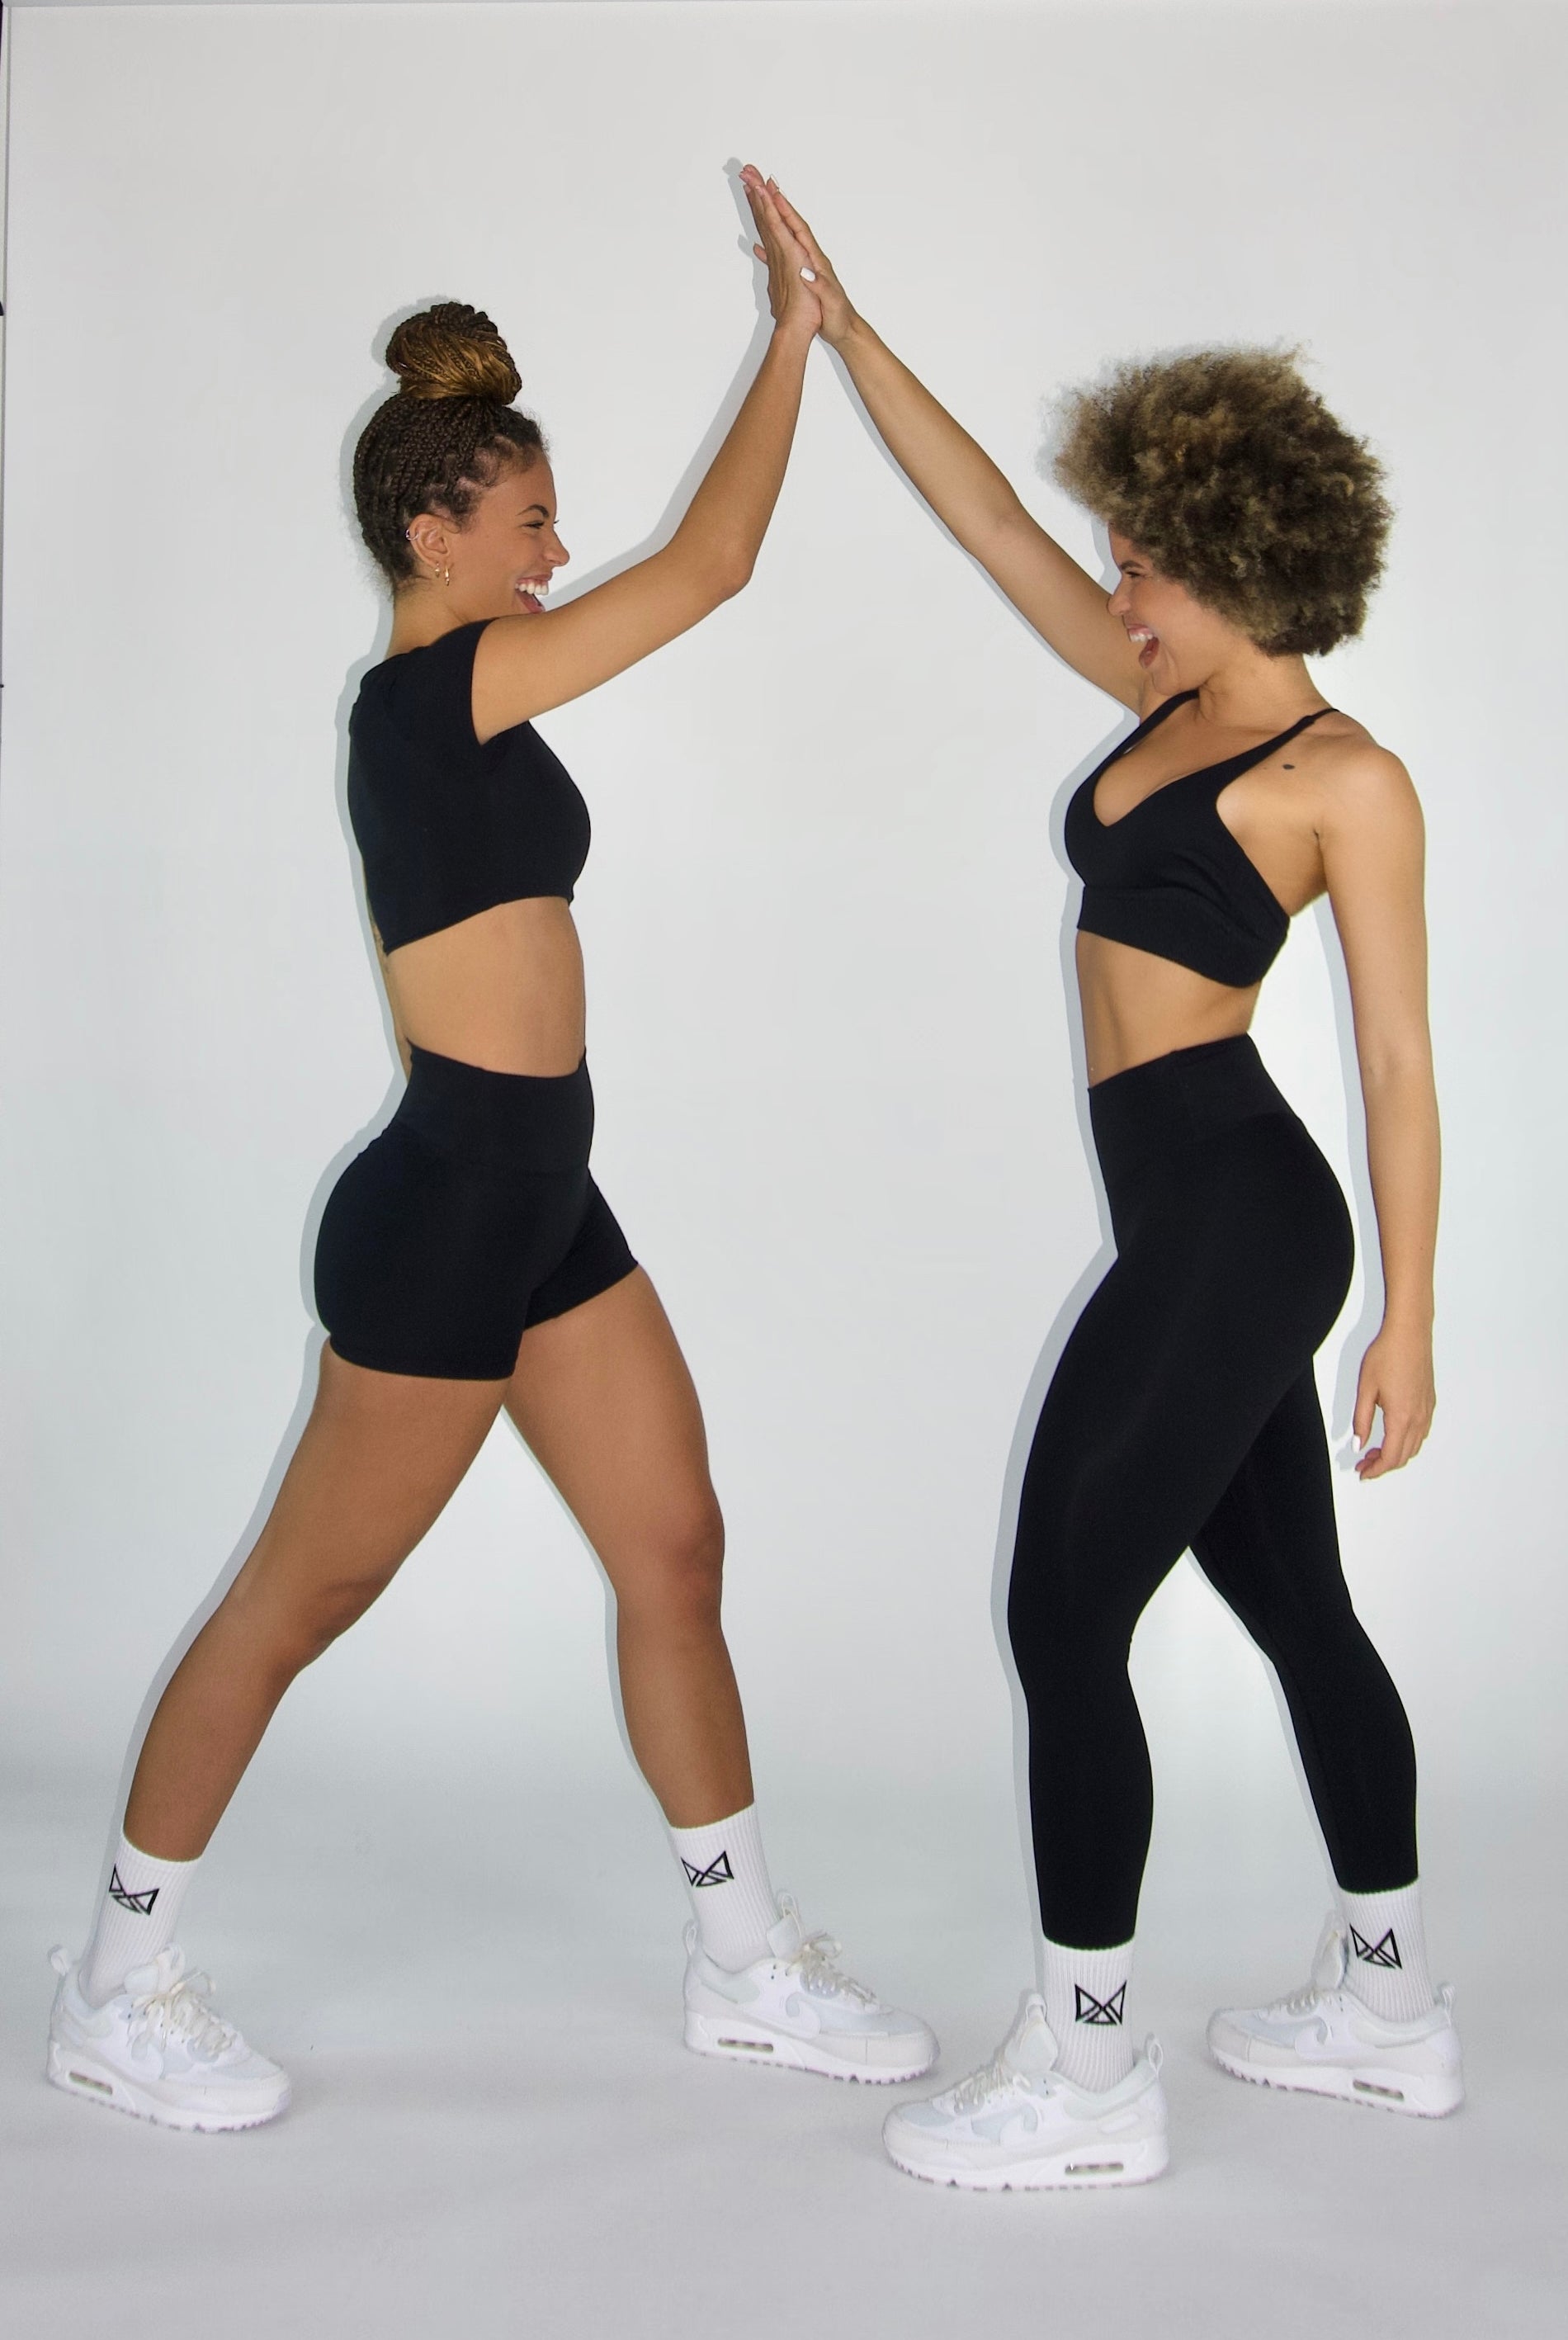 MILA MVMT Sportswear Emmie Short Sleeve Crop Top Sports Bra & Emmie Shorts Leggings Black Group Photo